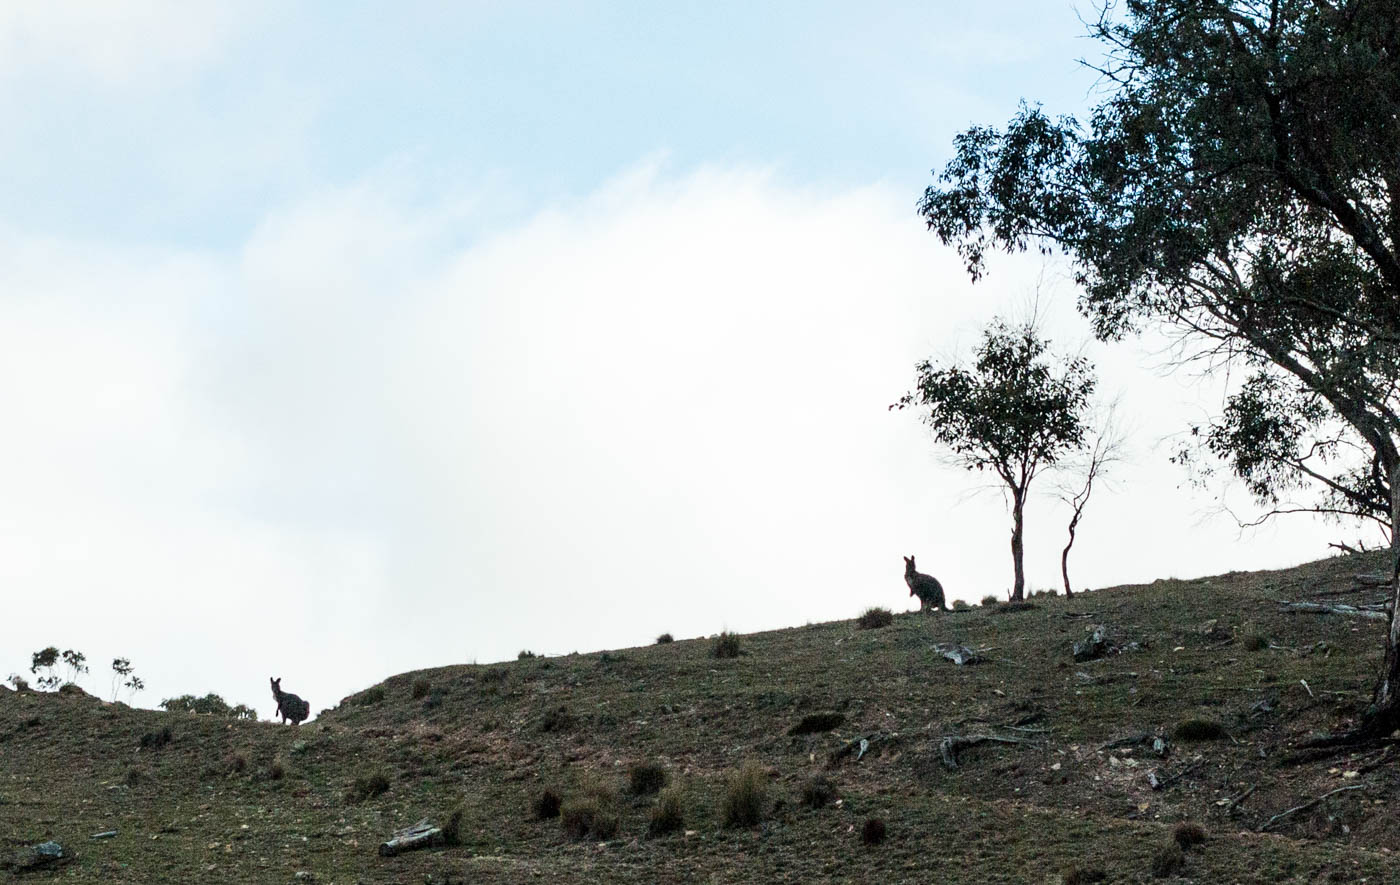 kangaroos on the hill